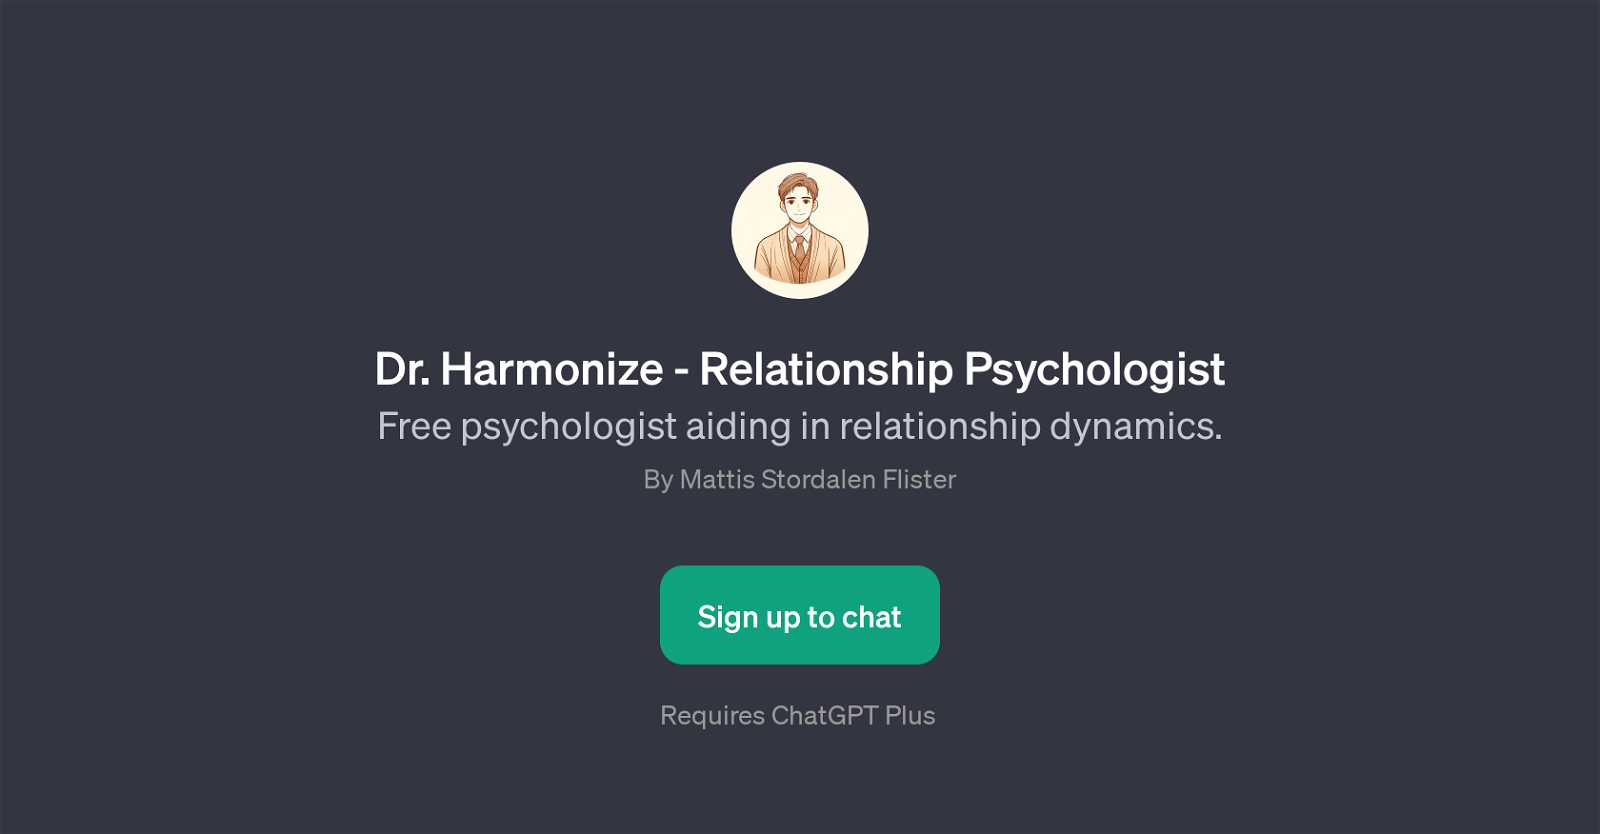 Dr. Harmonize - Relationship Psychologist website